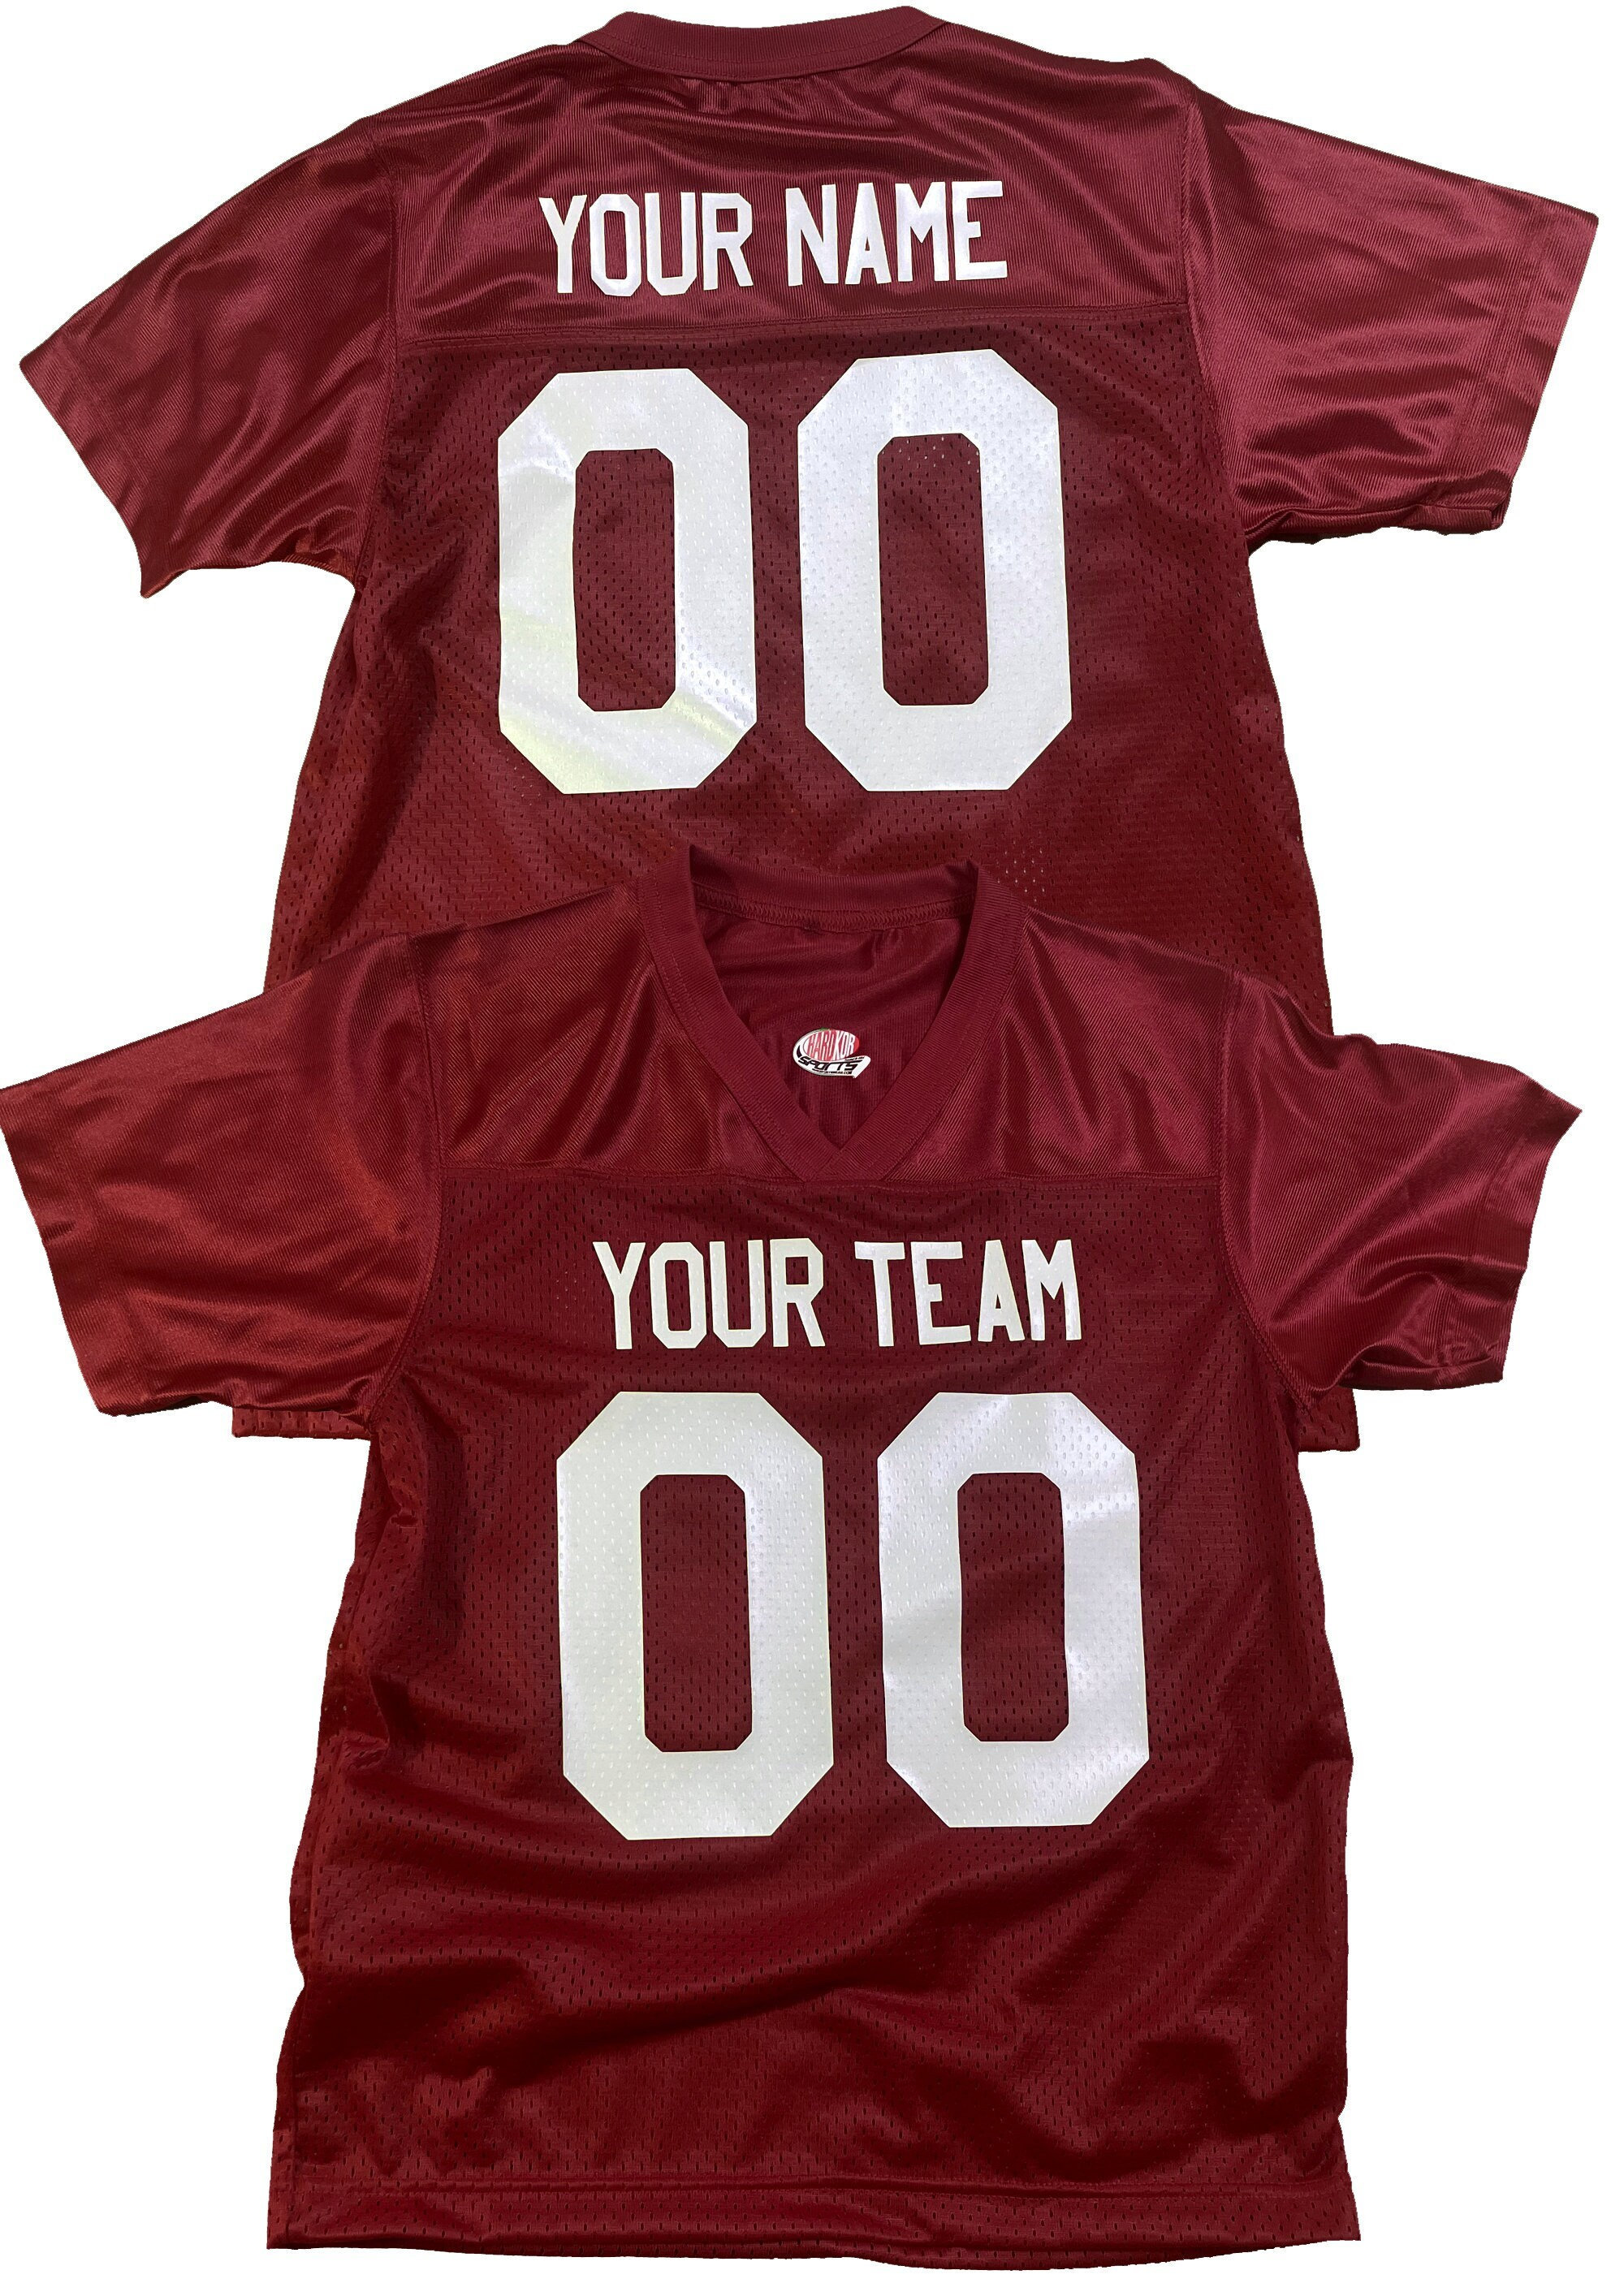 Custom Red Football Jerseys, Football Uniforms For Your Team